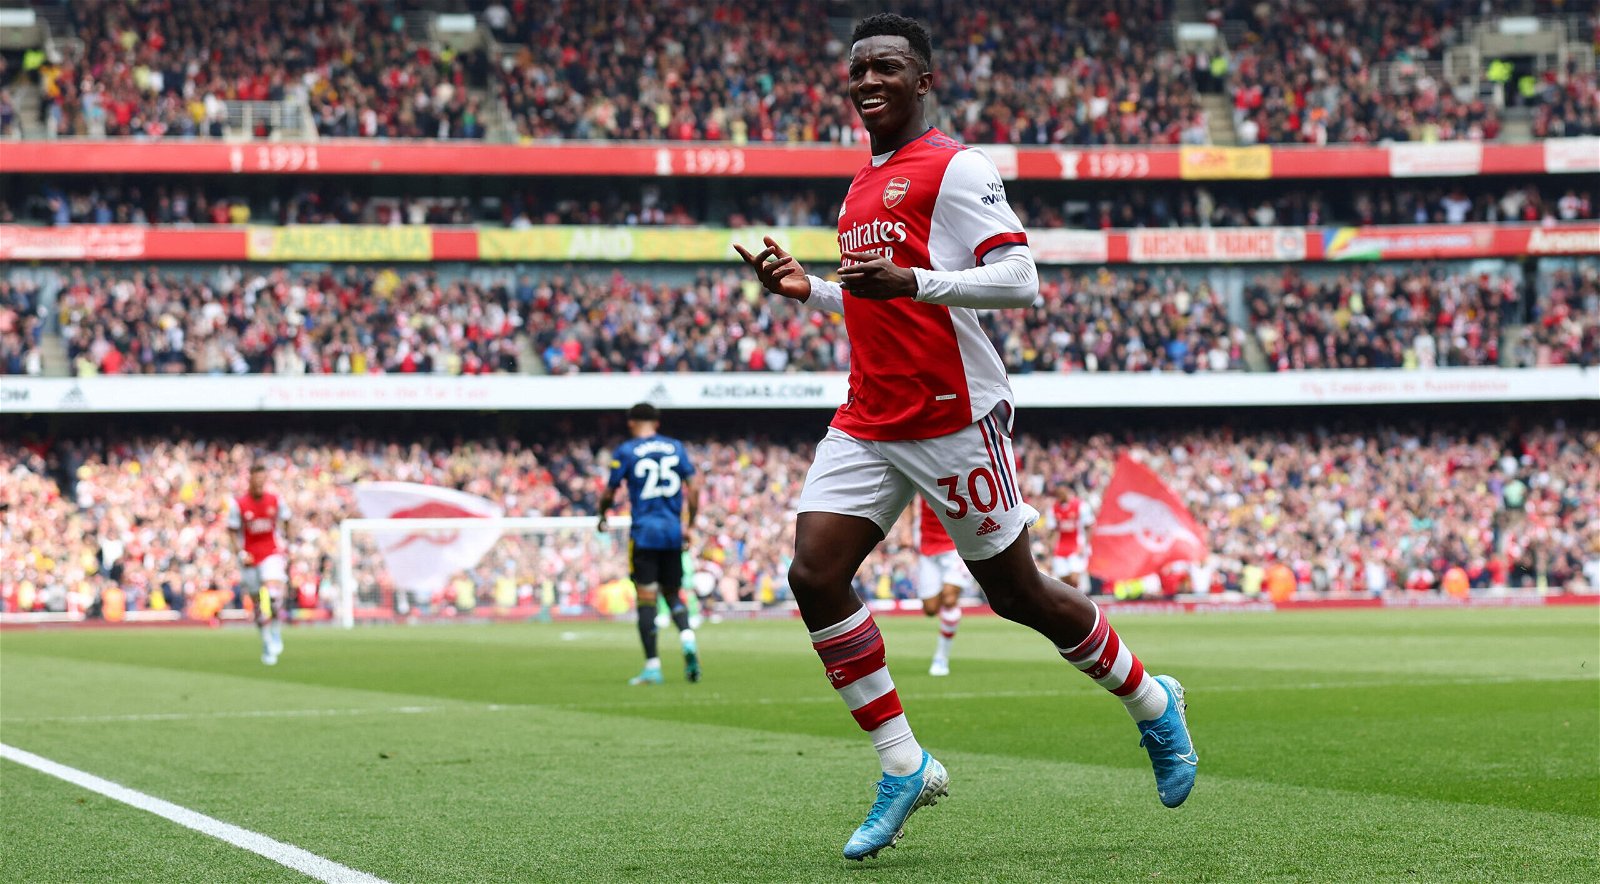 Eddie-Nketiah-celebrates-as-Arsenal-triumph-against-rivals-Manchester-United-in-the-Premier-League